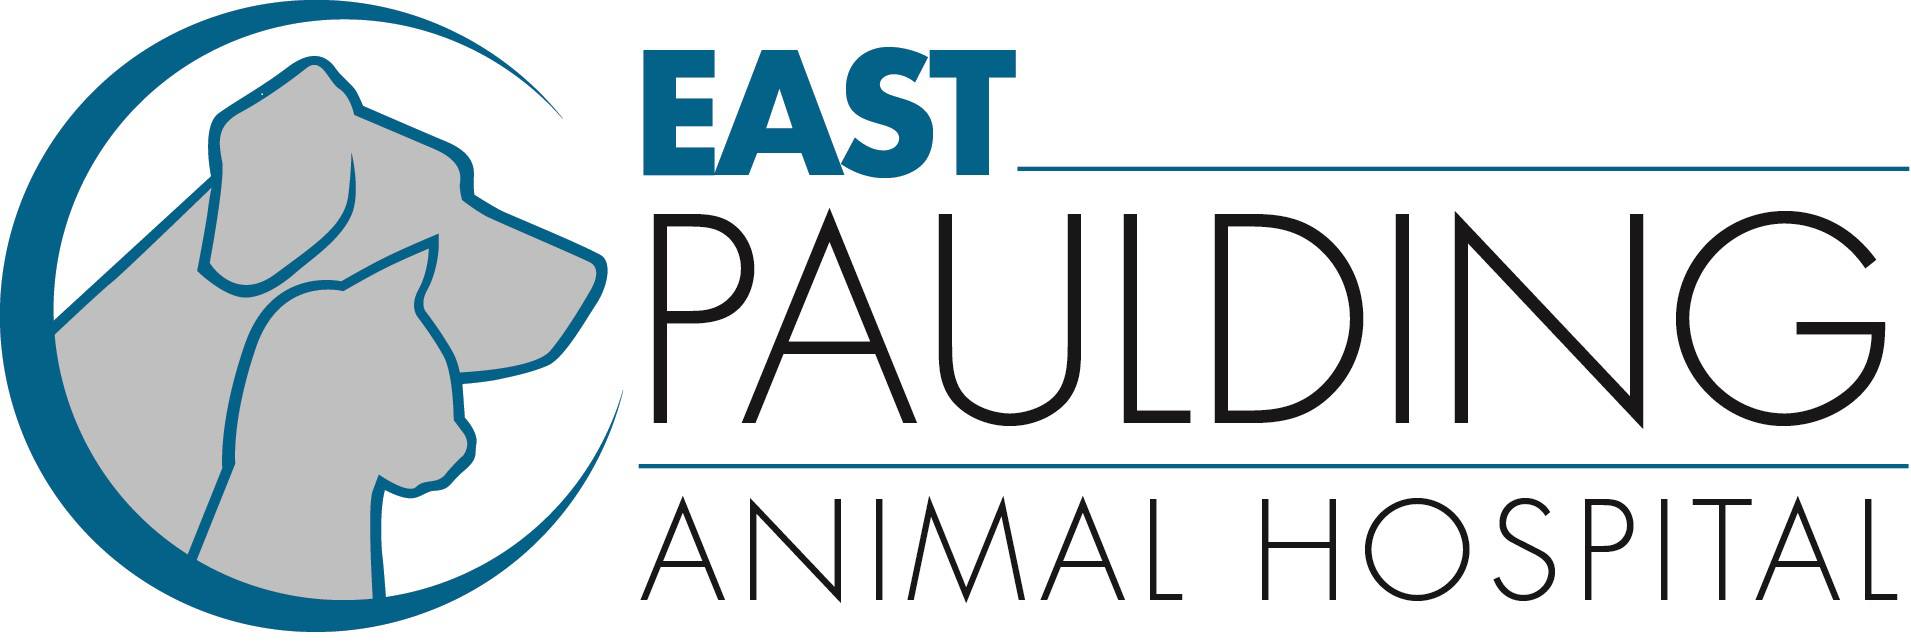 East Paulding Animal Hospital Logo